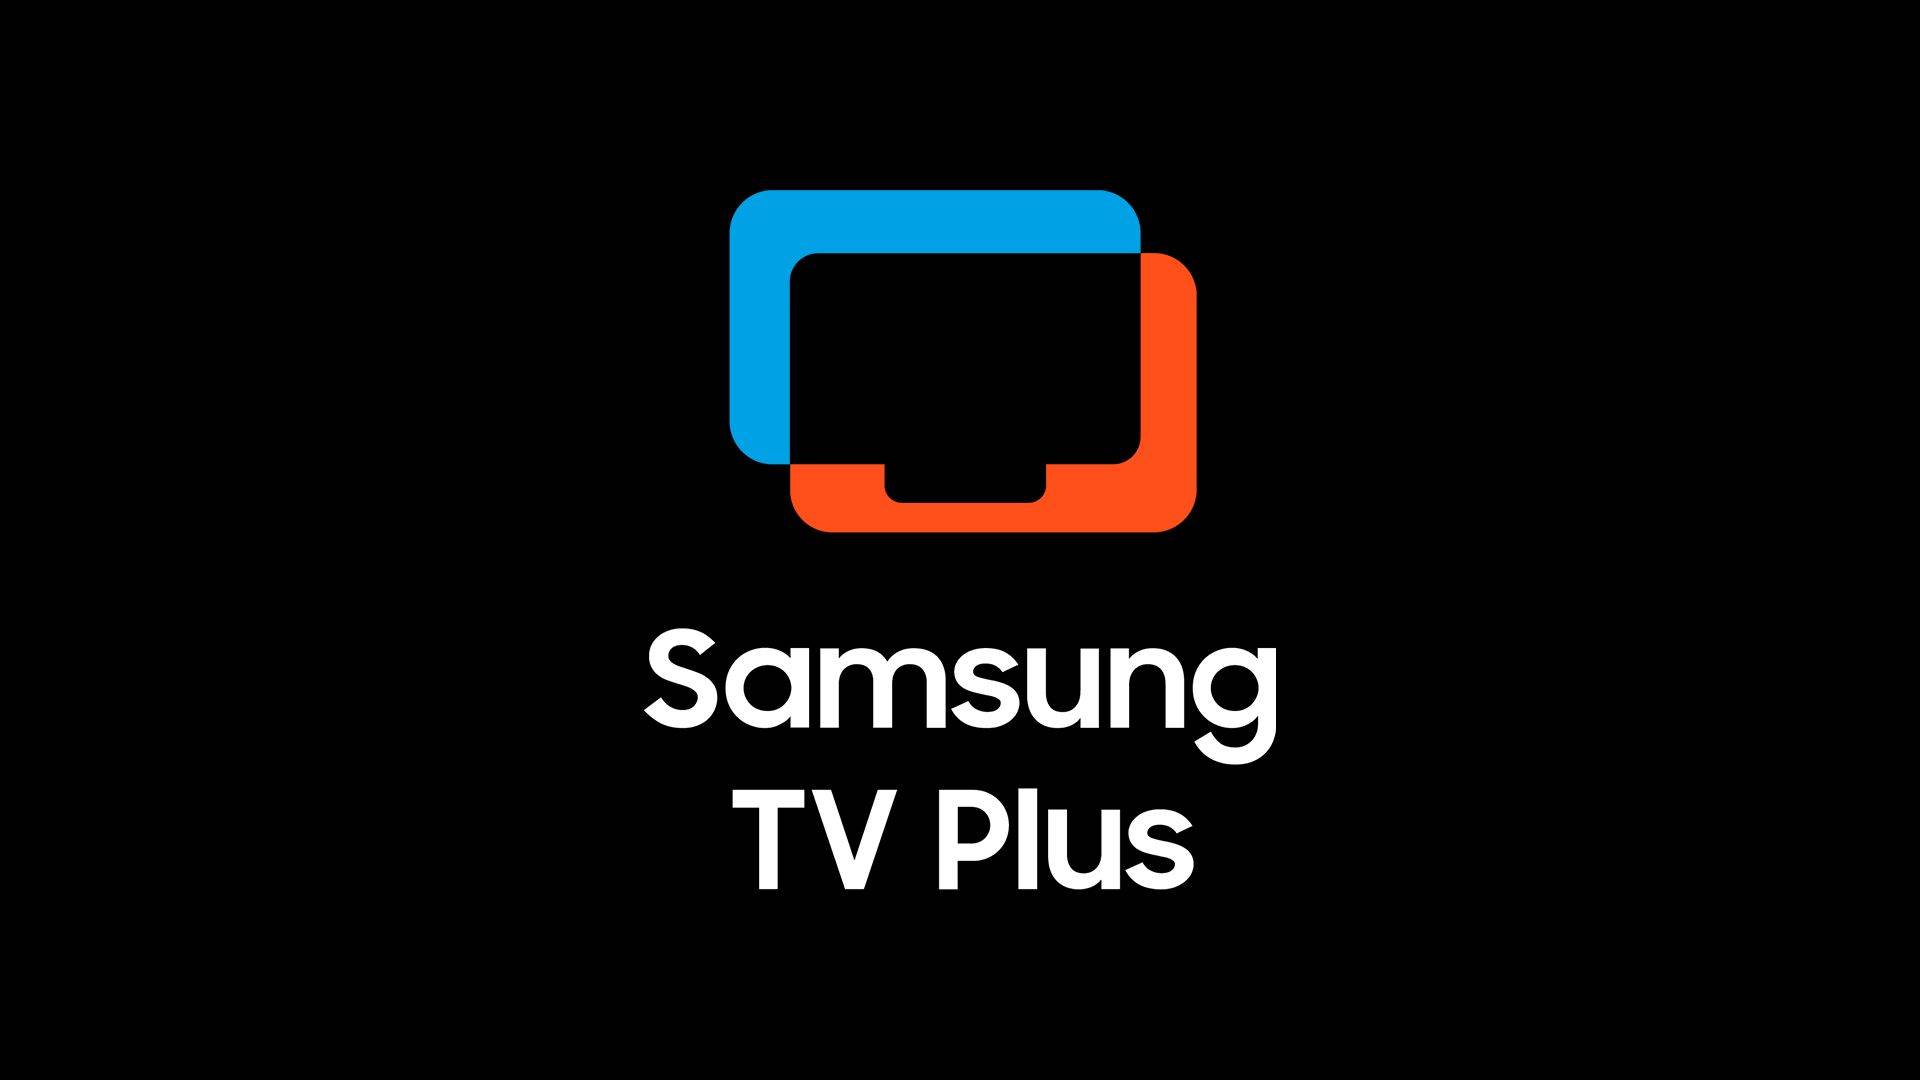  Samsung TV Plus (3).jpg 